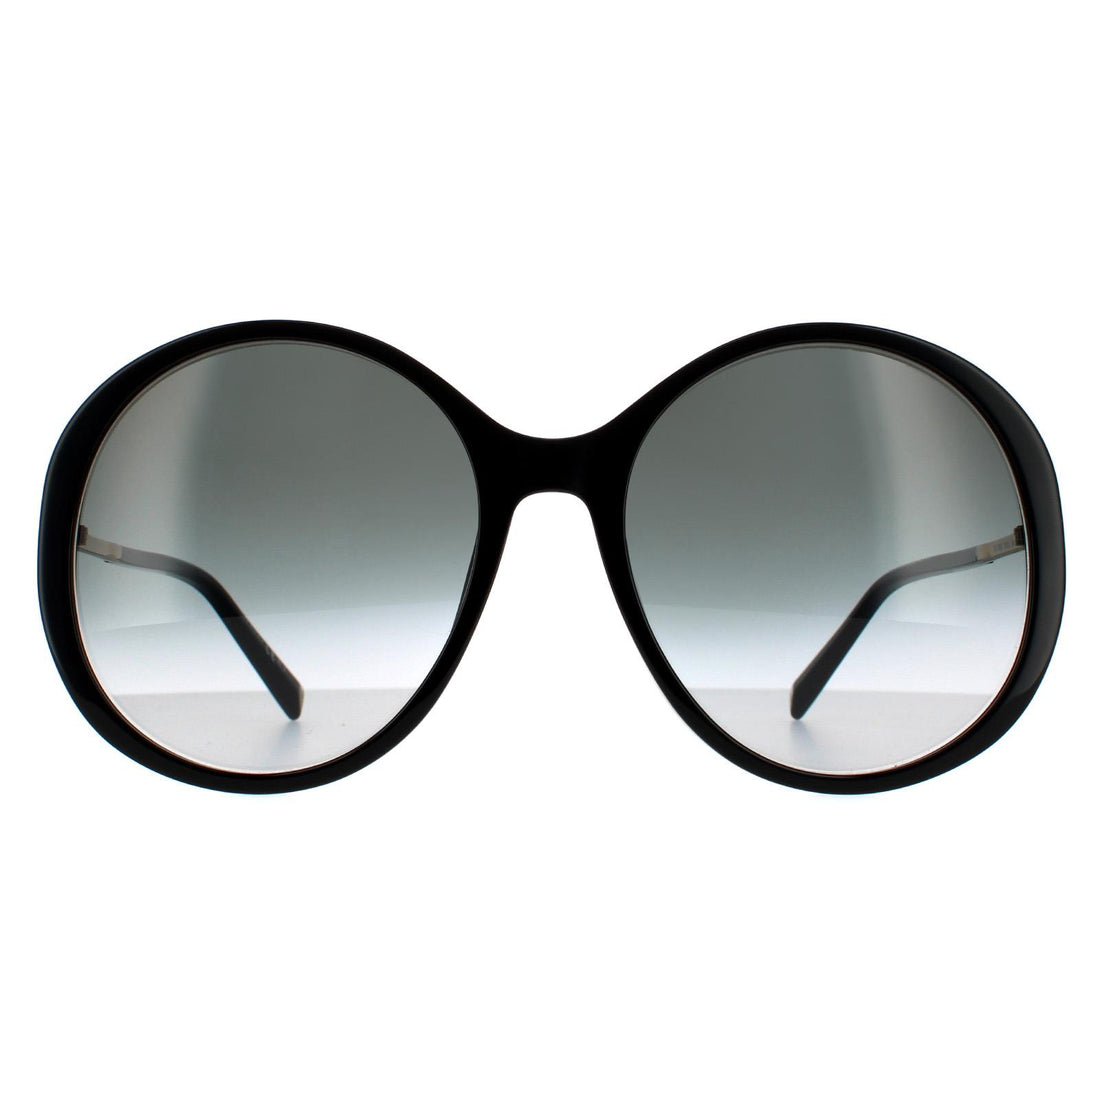 Givenchy GV7189/S Sunglasses Black / Grey Gradient